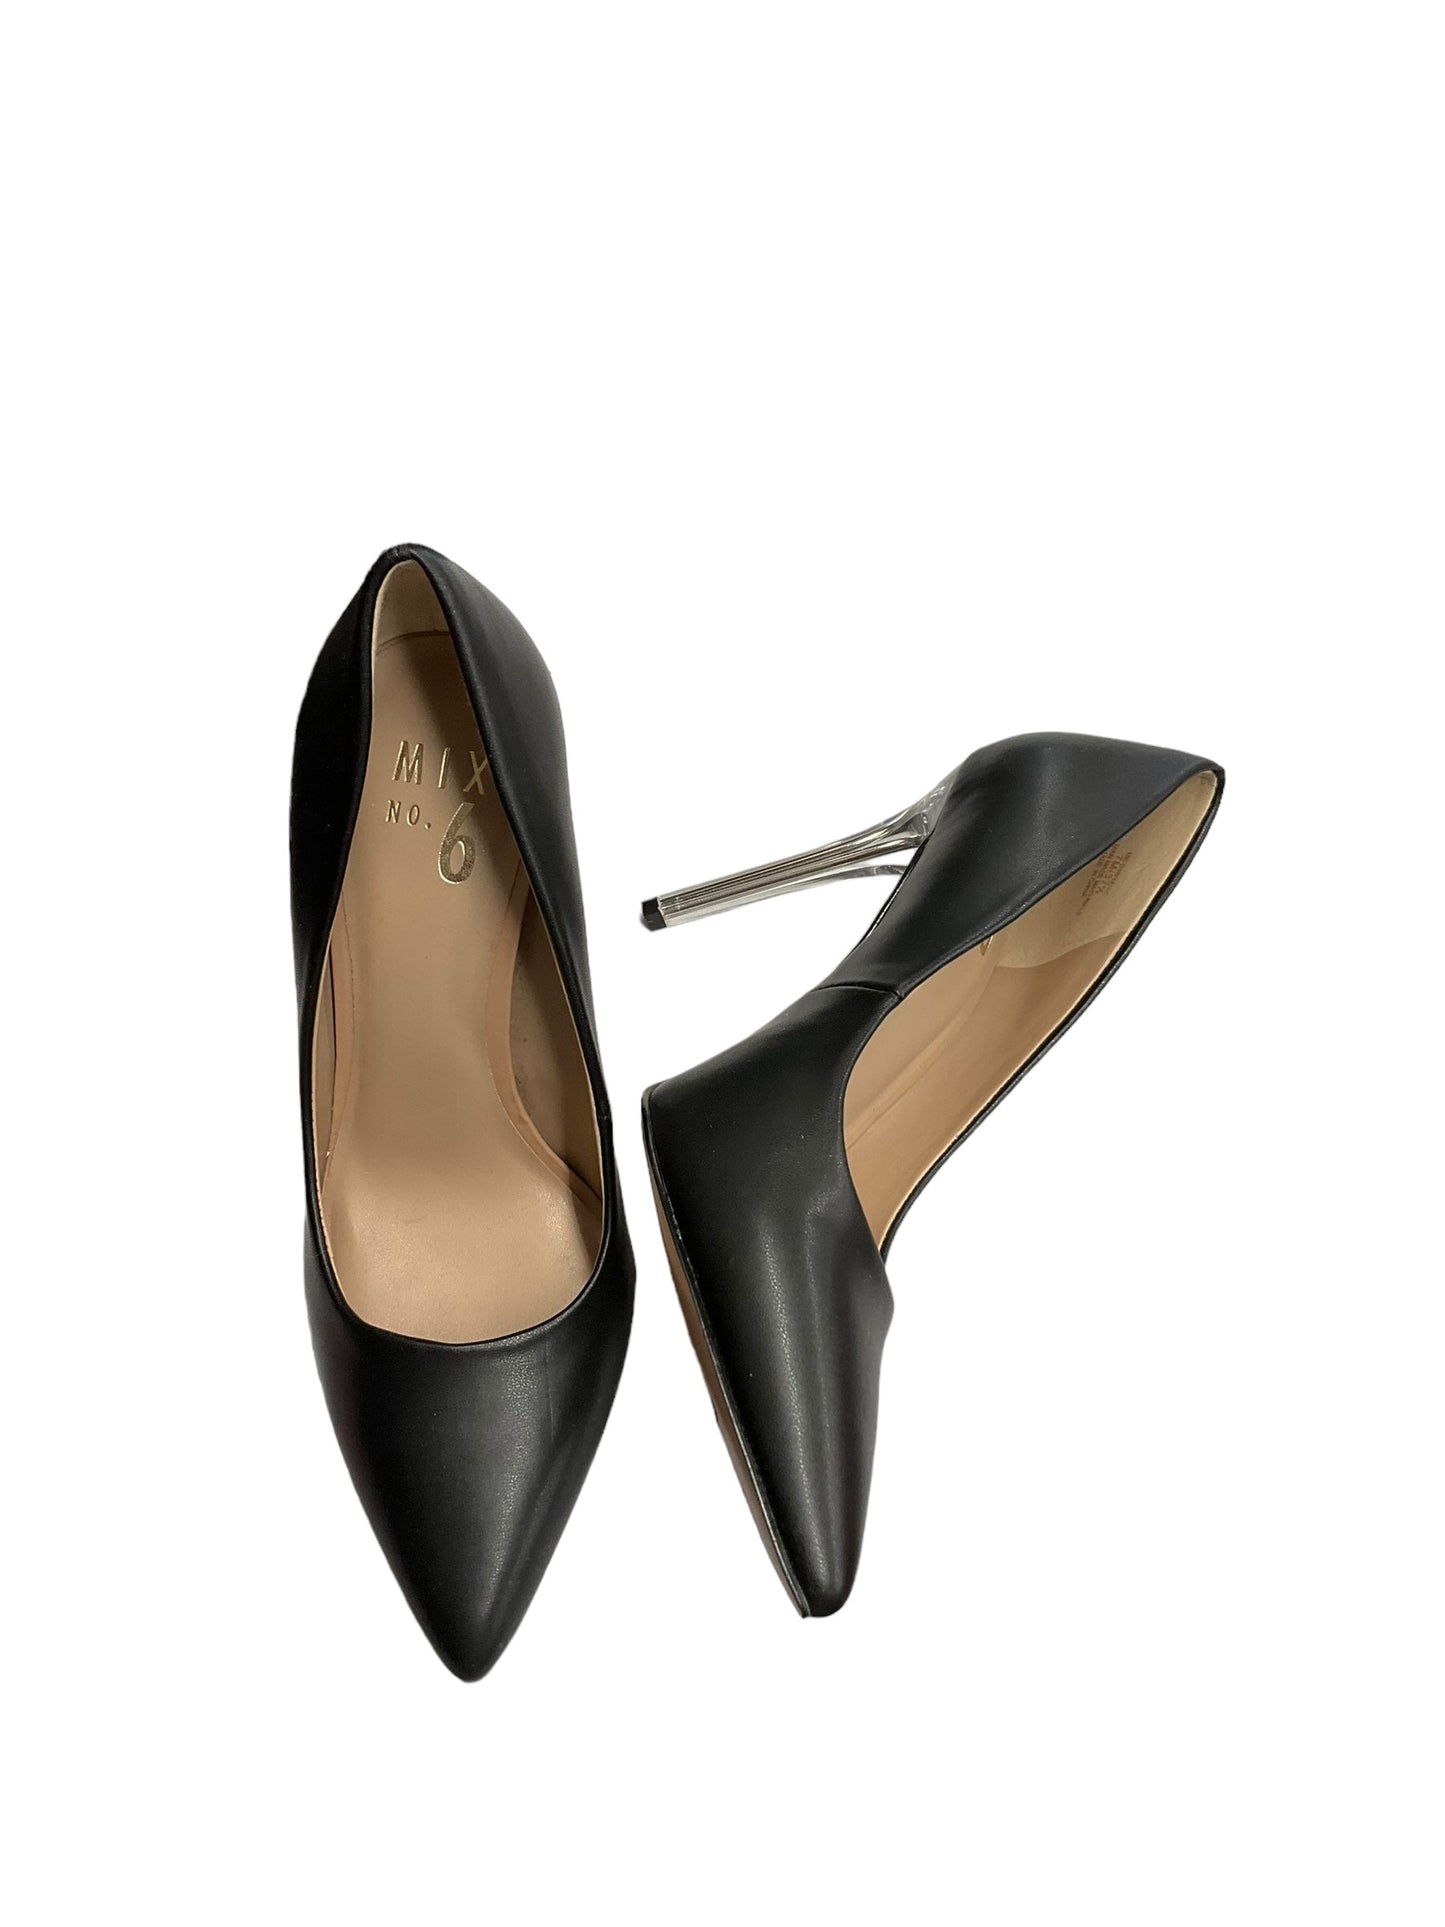 Black & Silver Shoes Heels Stiletto Mix No 6, Size 7